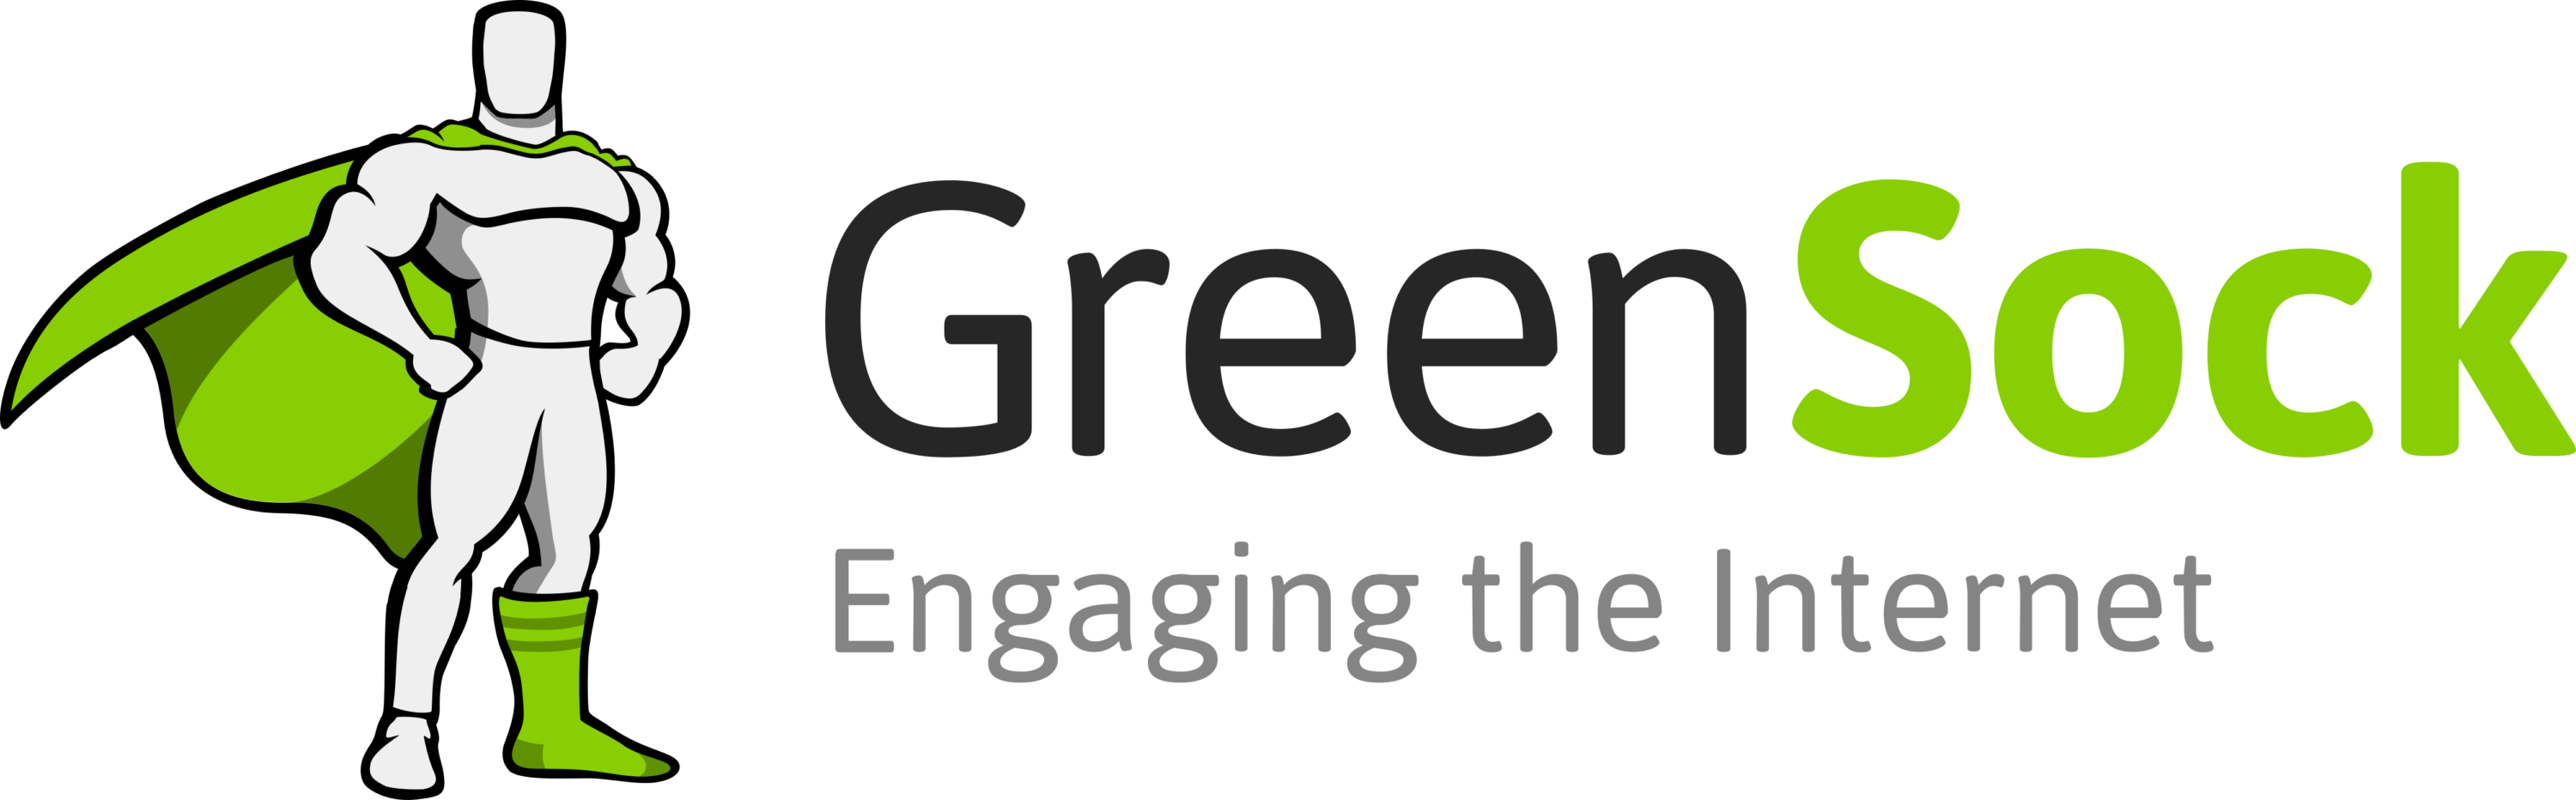 GreenSock (GSAP) Logo